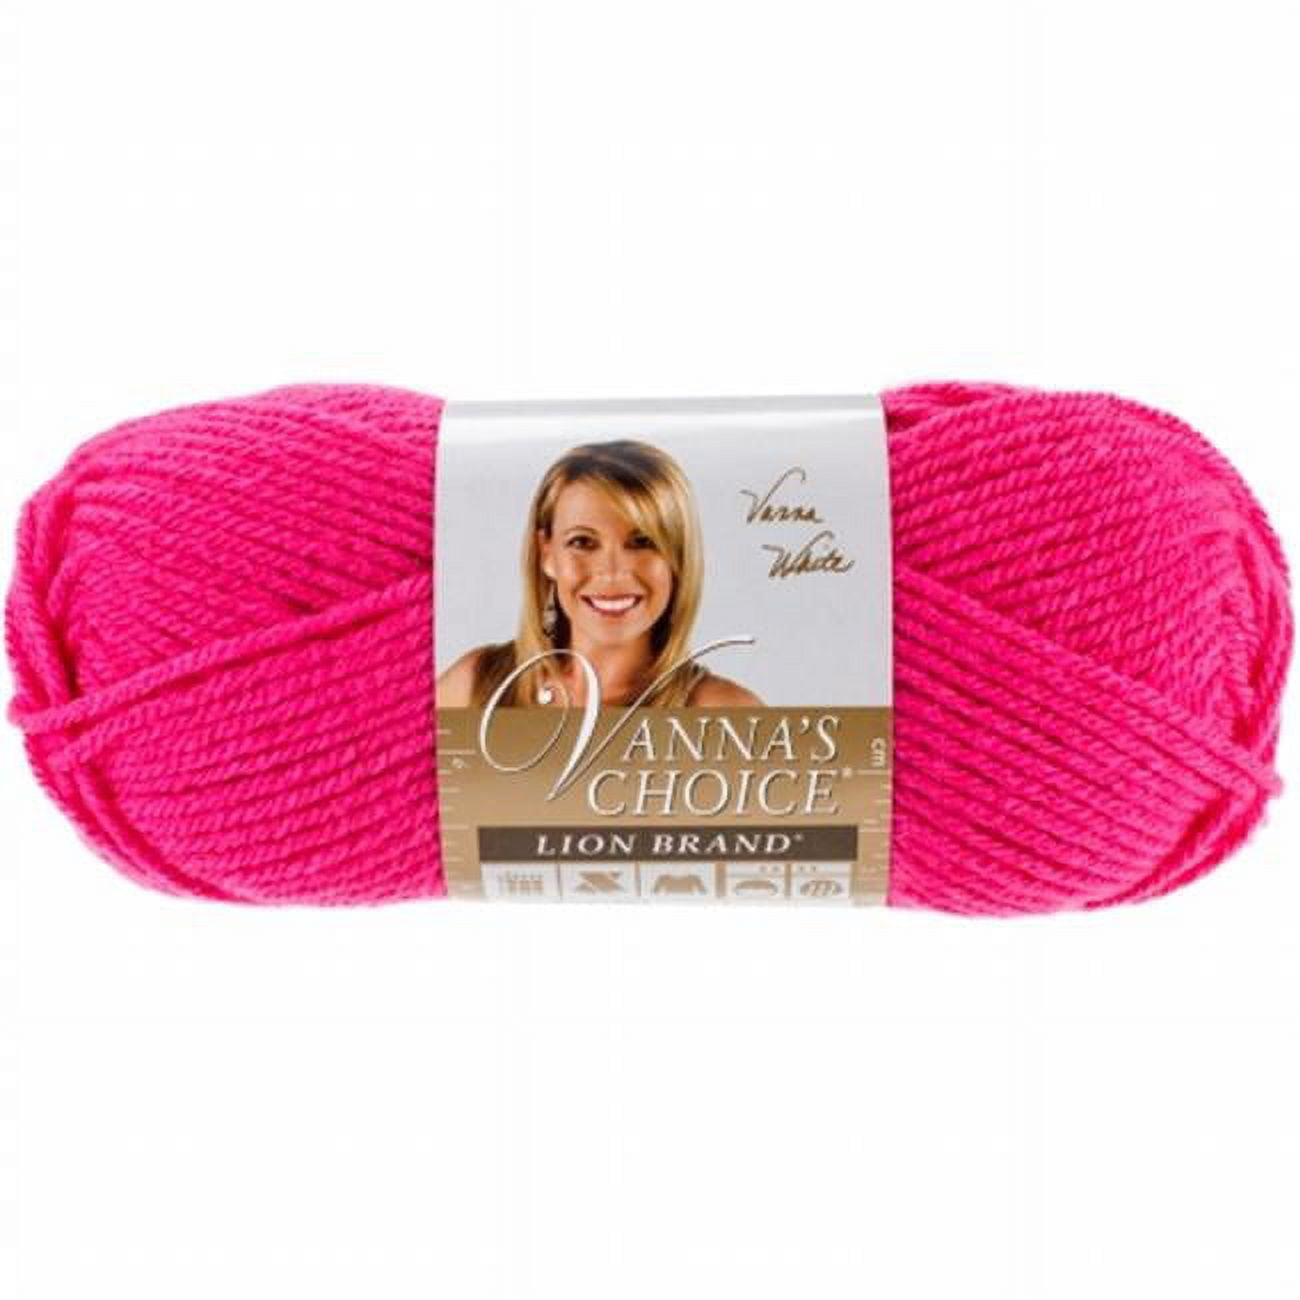  Lion Brand Vanna's Choice Yarn Mustard 860-158 (6-Skein) Same  Dye Lot Worsted Medium #4 Soft Knitting Yarn Crochet 100% Acrylic Bundle  with 1 Artsiga Craft Bag